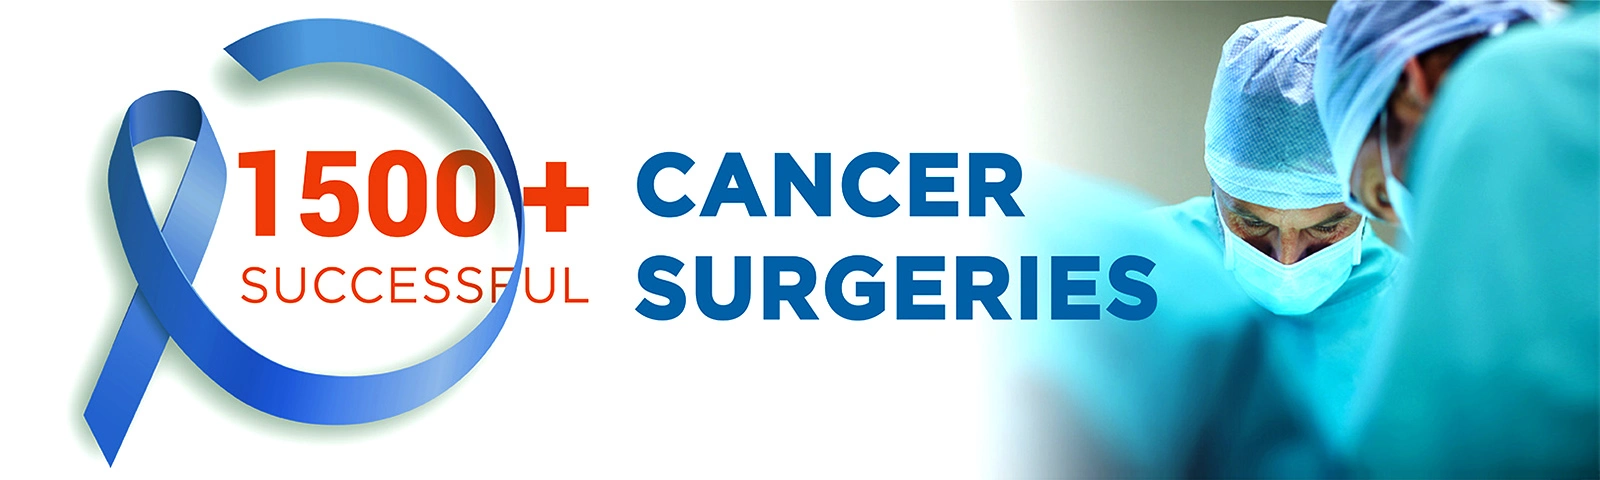 1500-Successful-Cancer-Surgeries